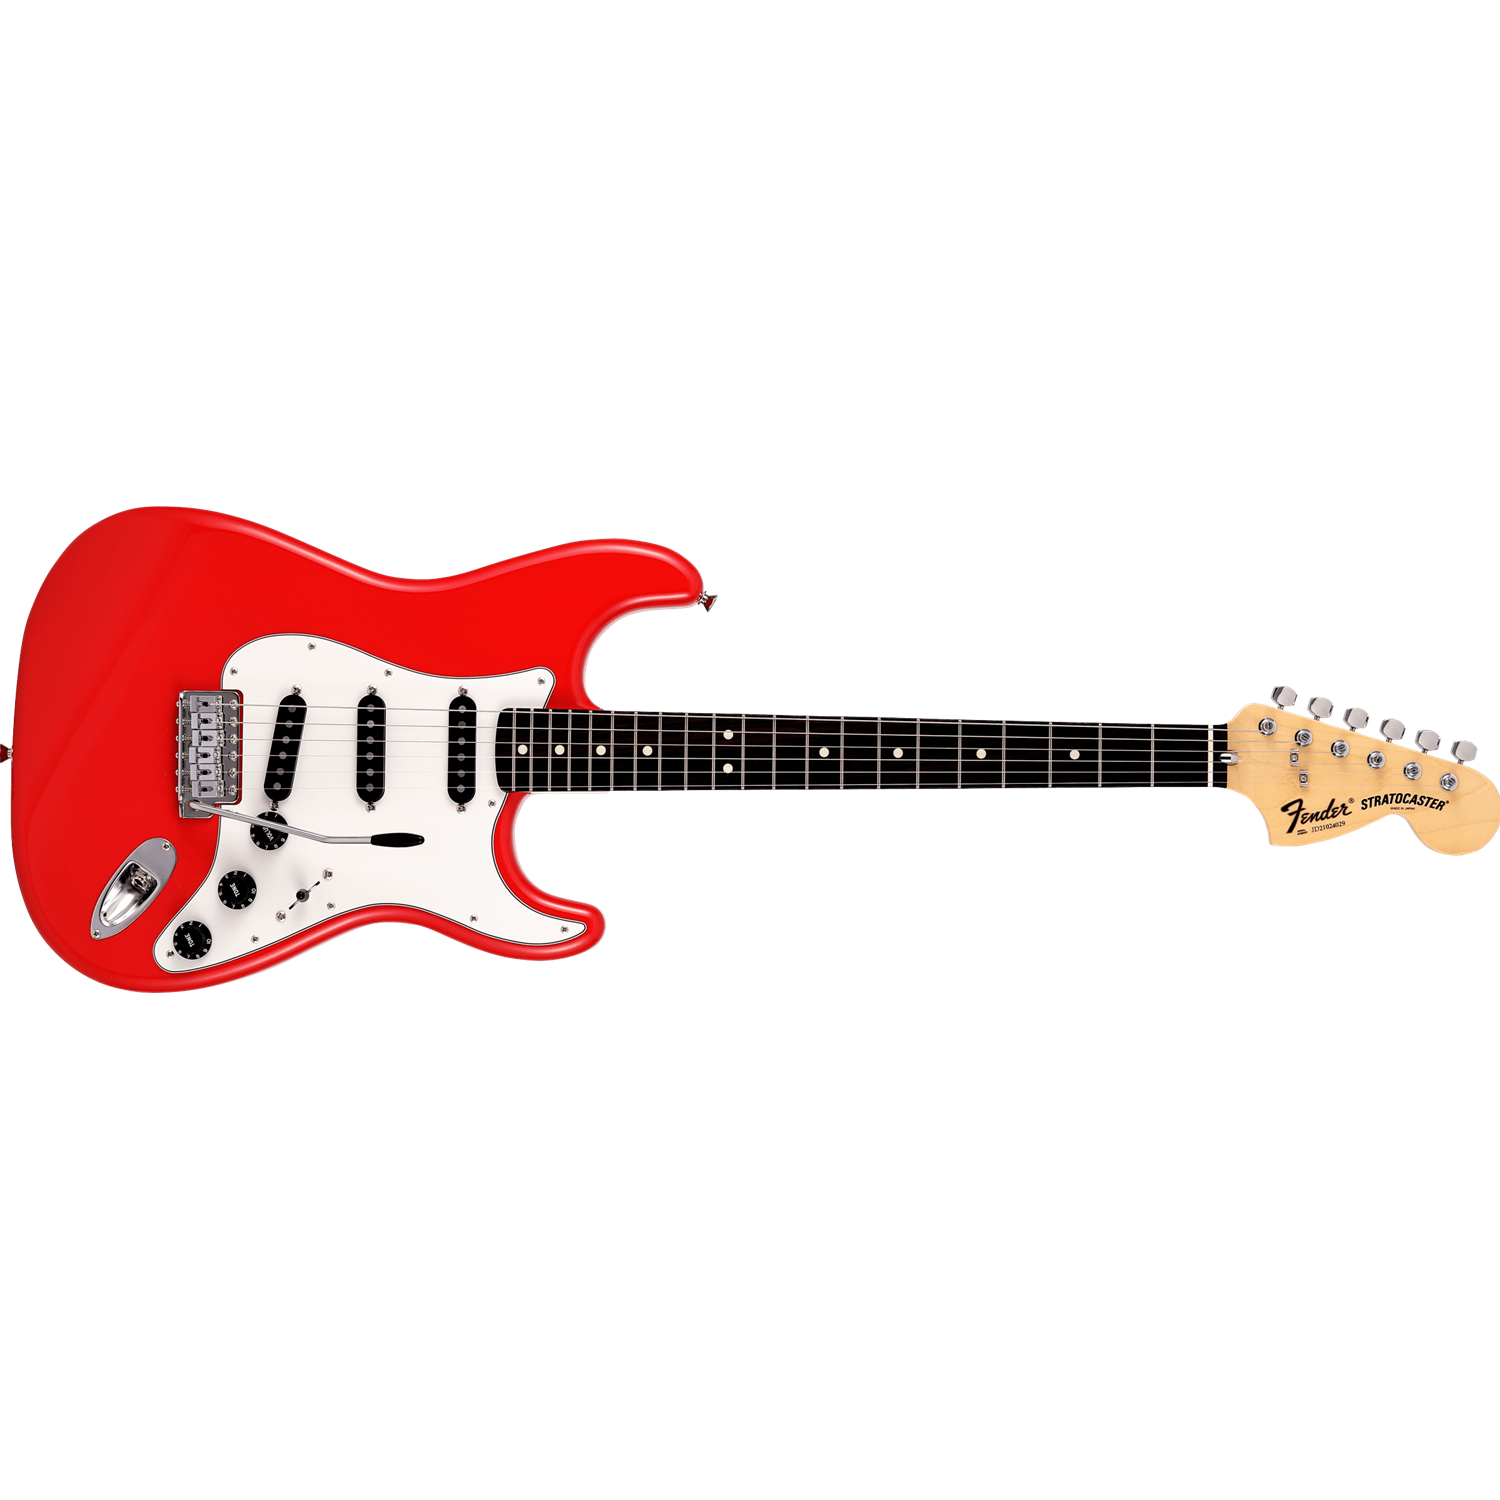 Fender 
Made in Japan Limited International Color Stratocaster®, Rosewood Fingerboard, Morocco Red